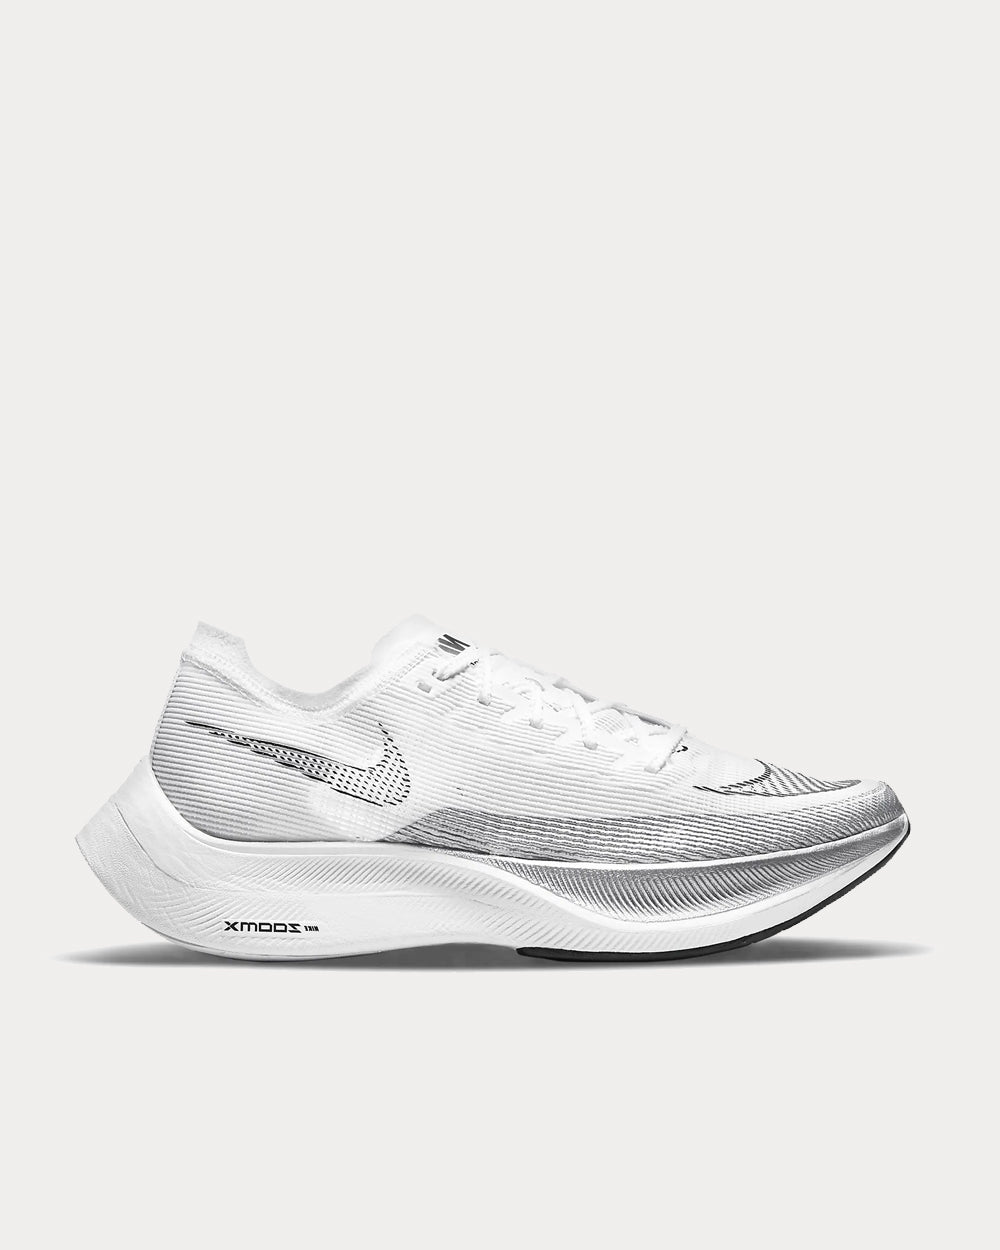 Nike ZoomX Next% / Metallic Silver / Black Running Shoes - Sneak in Peace